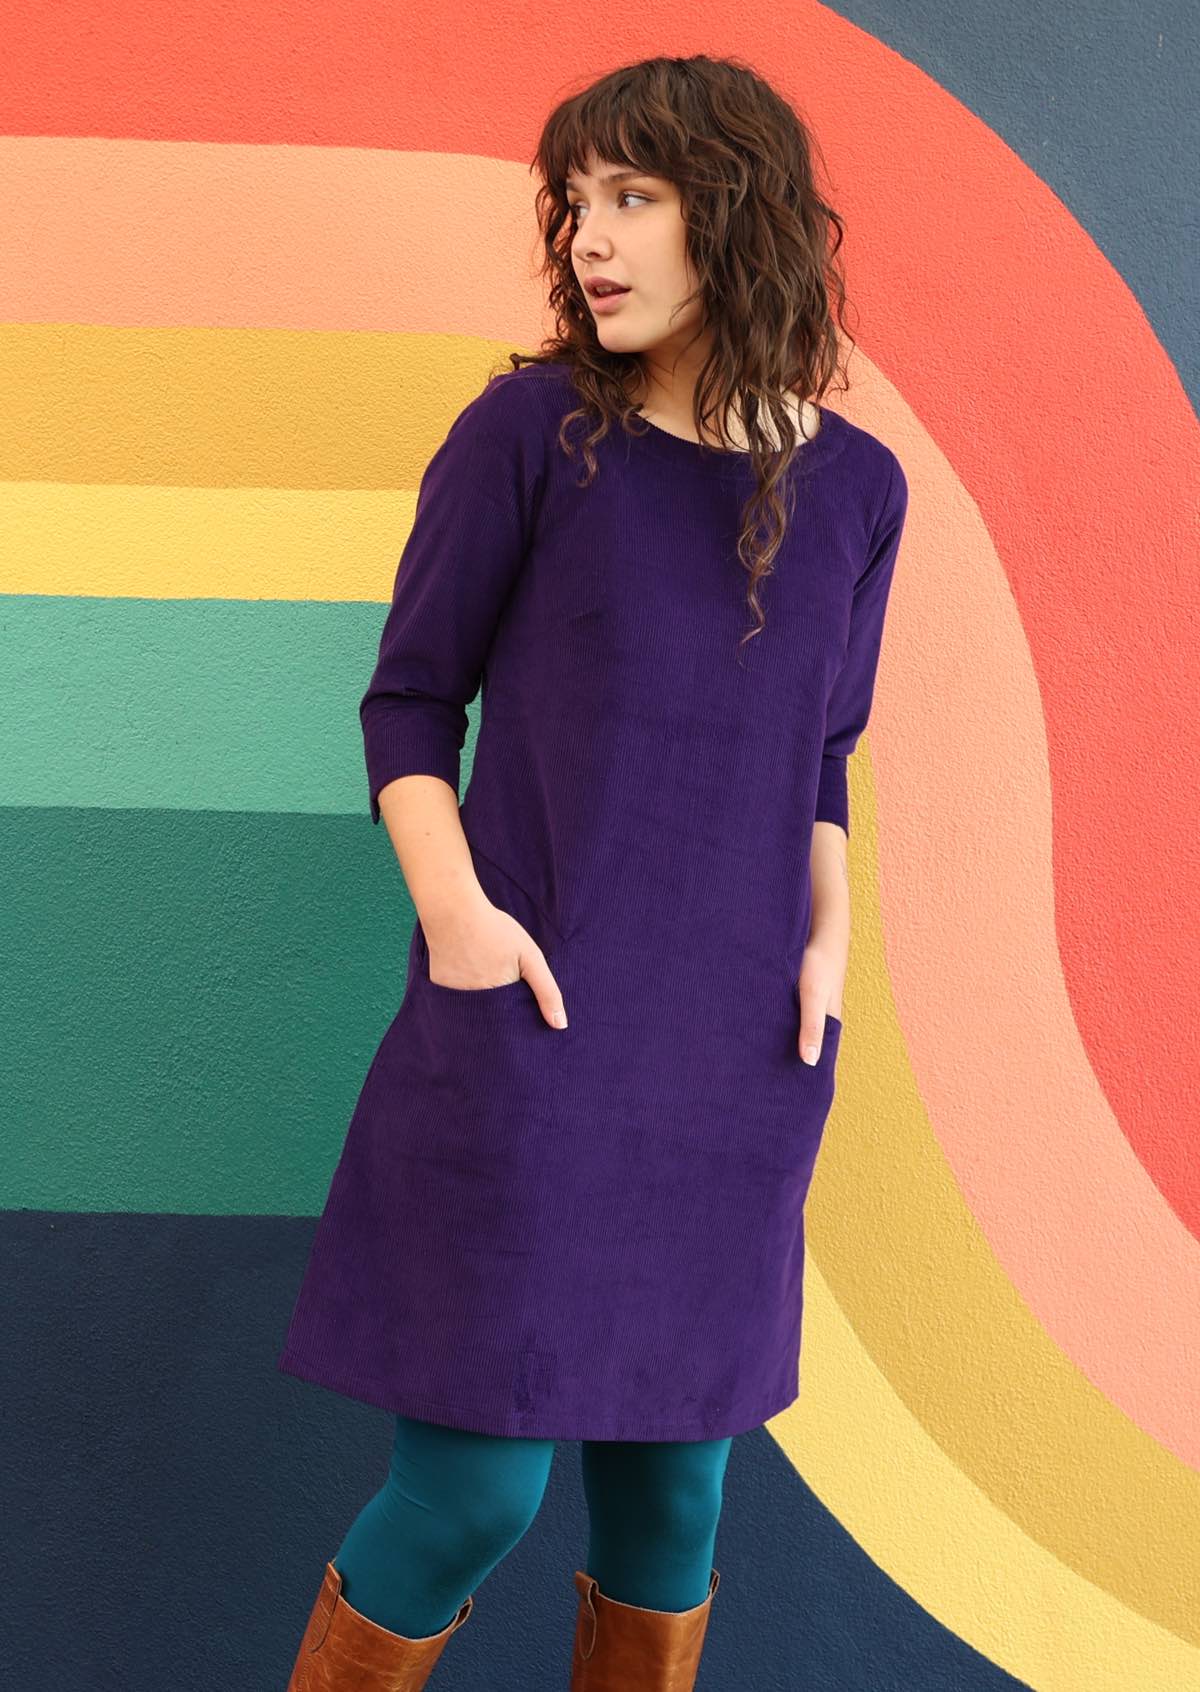 Cotton corduroy bright purple dress with pockets